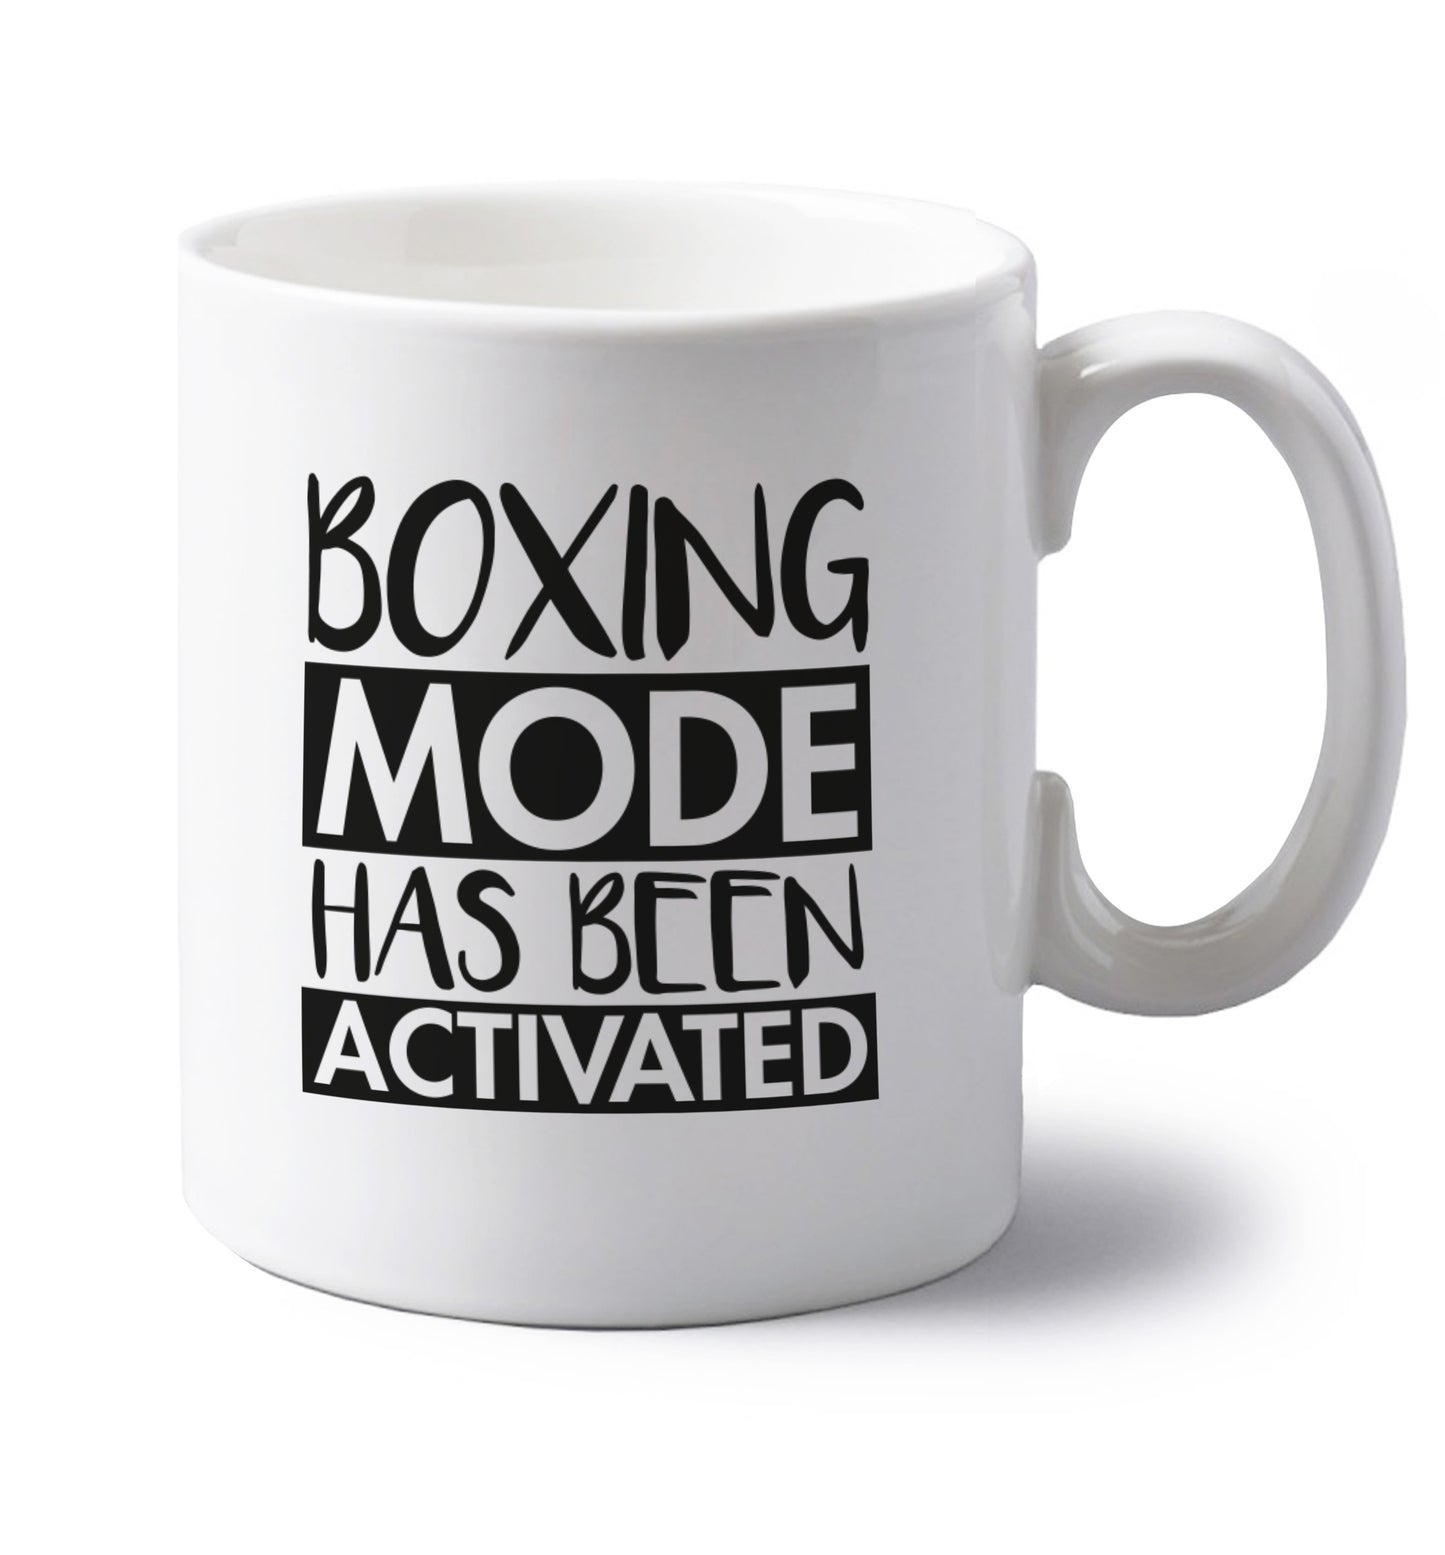 Boxing mode activated left handed white ceramic mug 